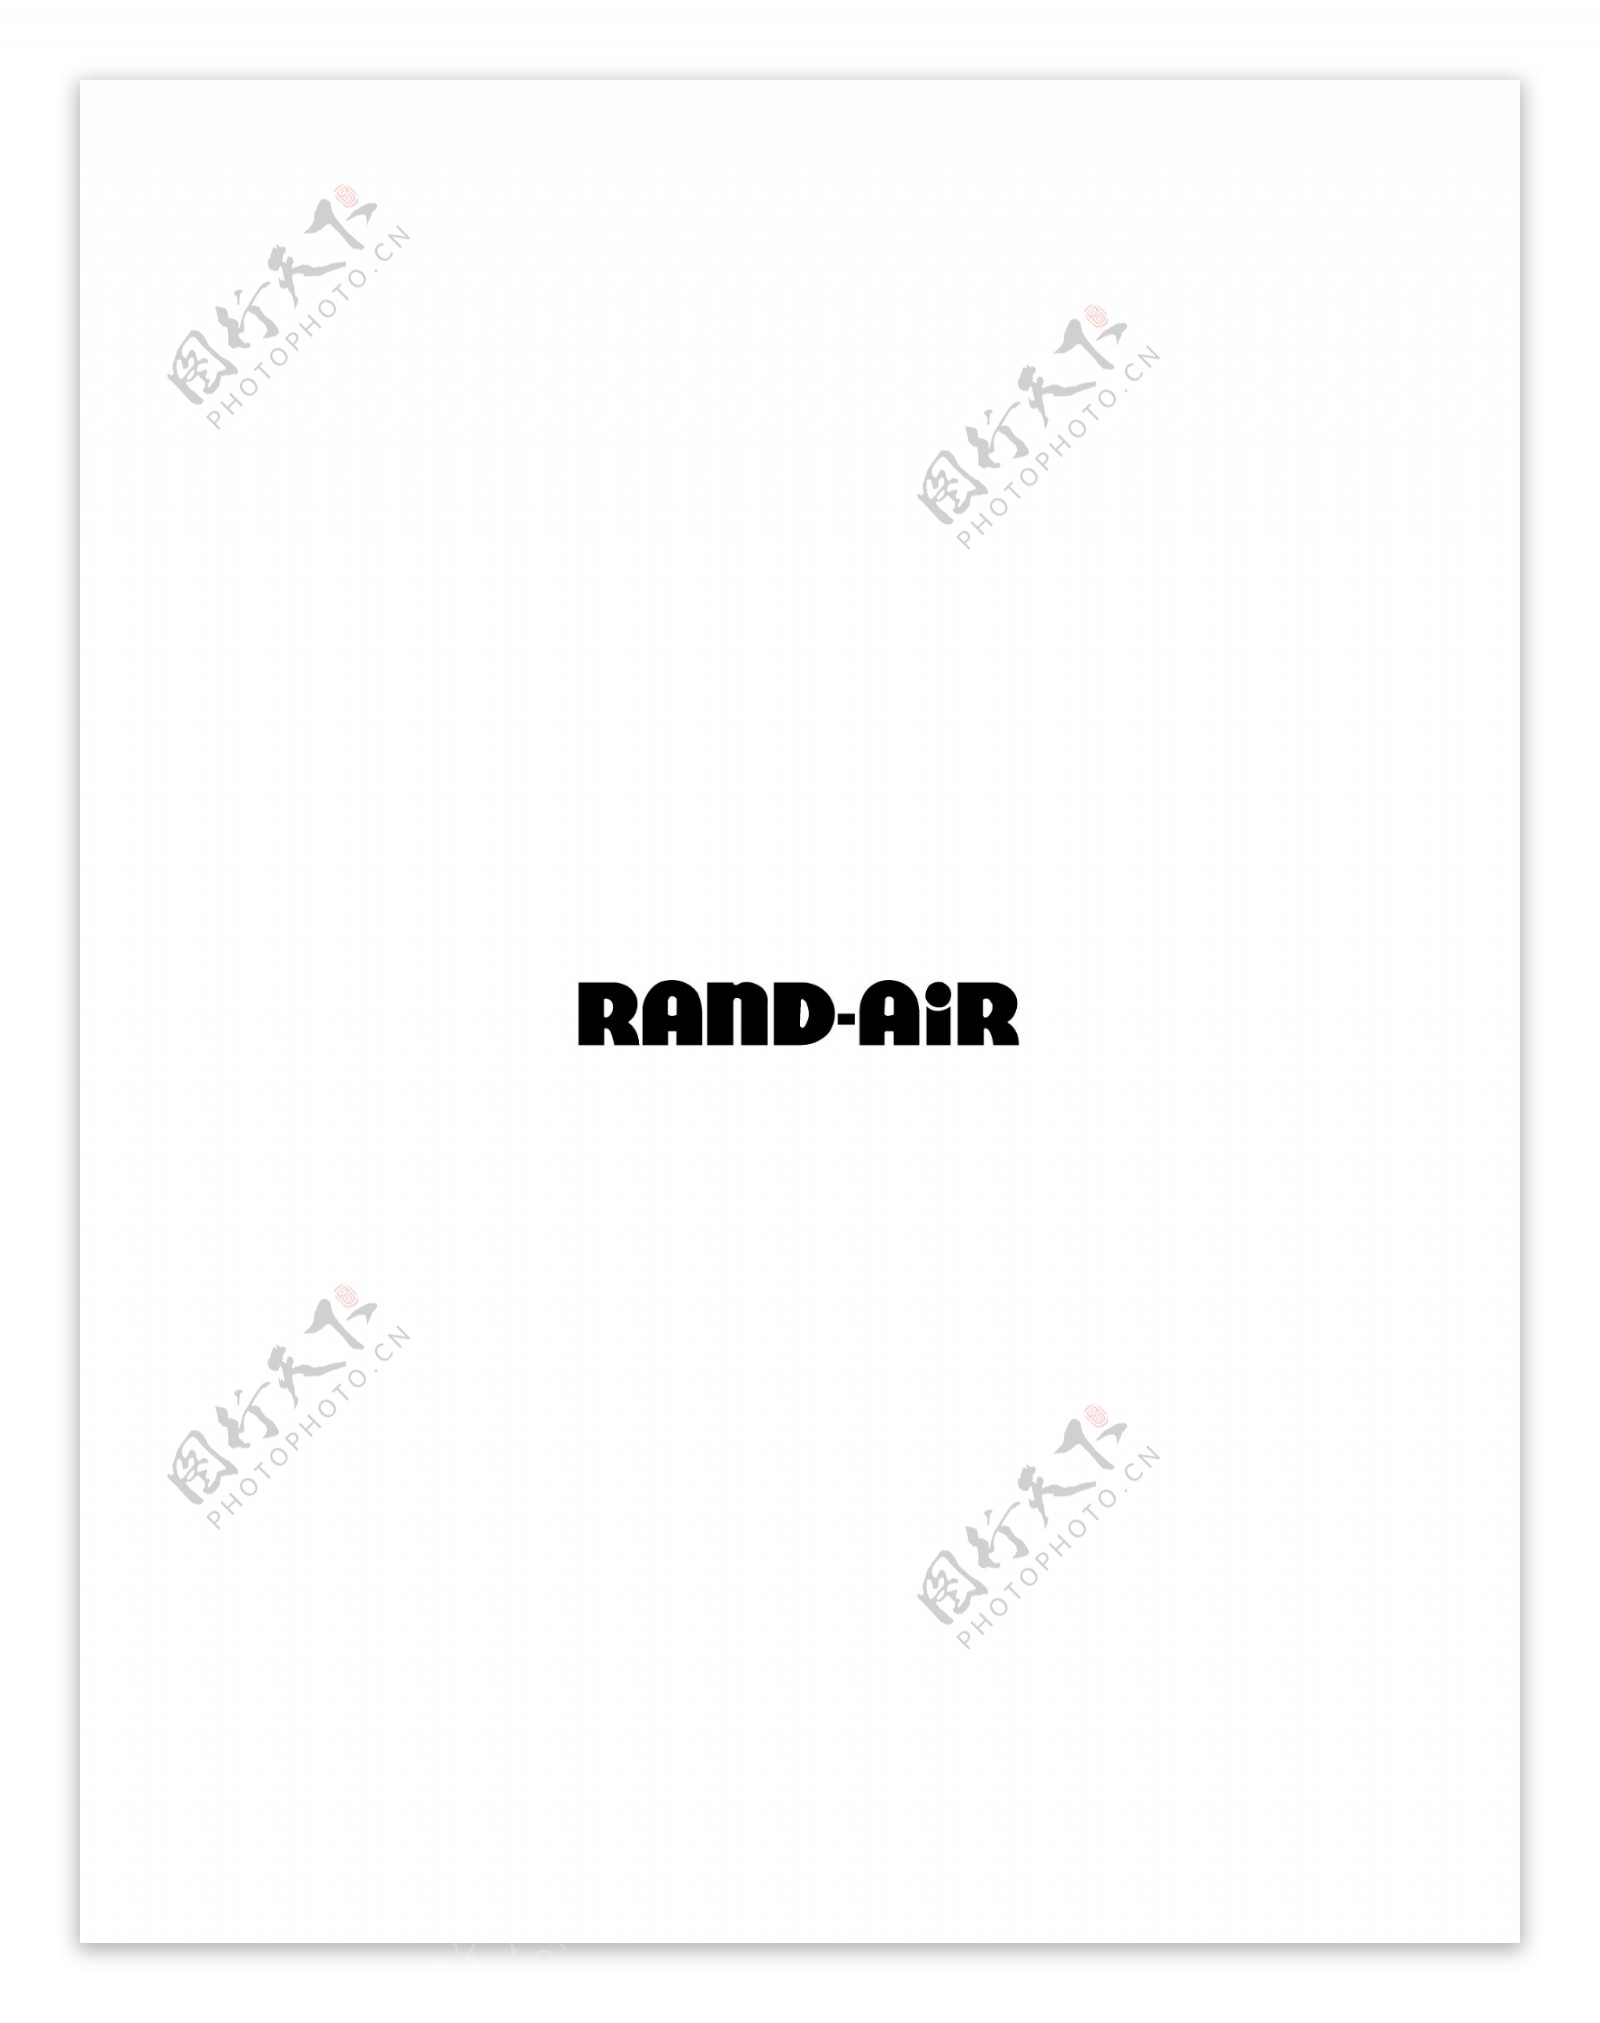 RandAirlogo设计欣赏RandAir民航业LOGO下载标志设计欣赏